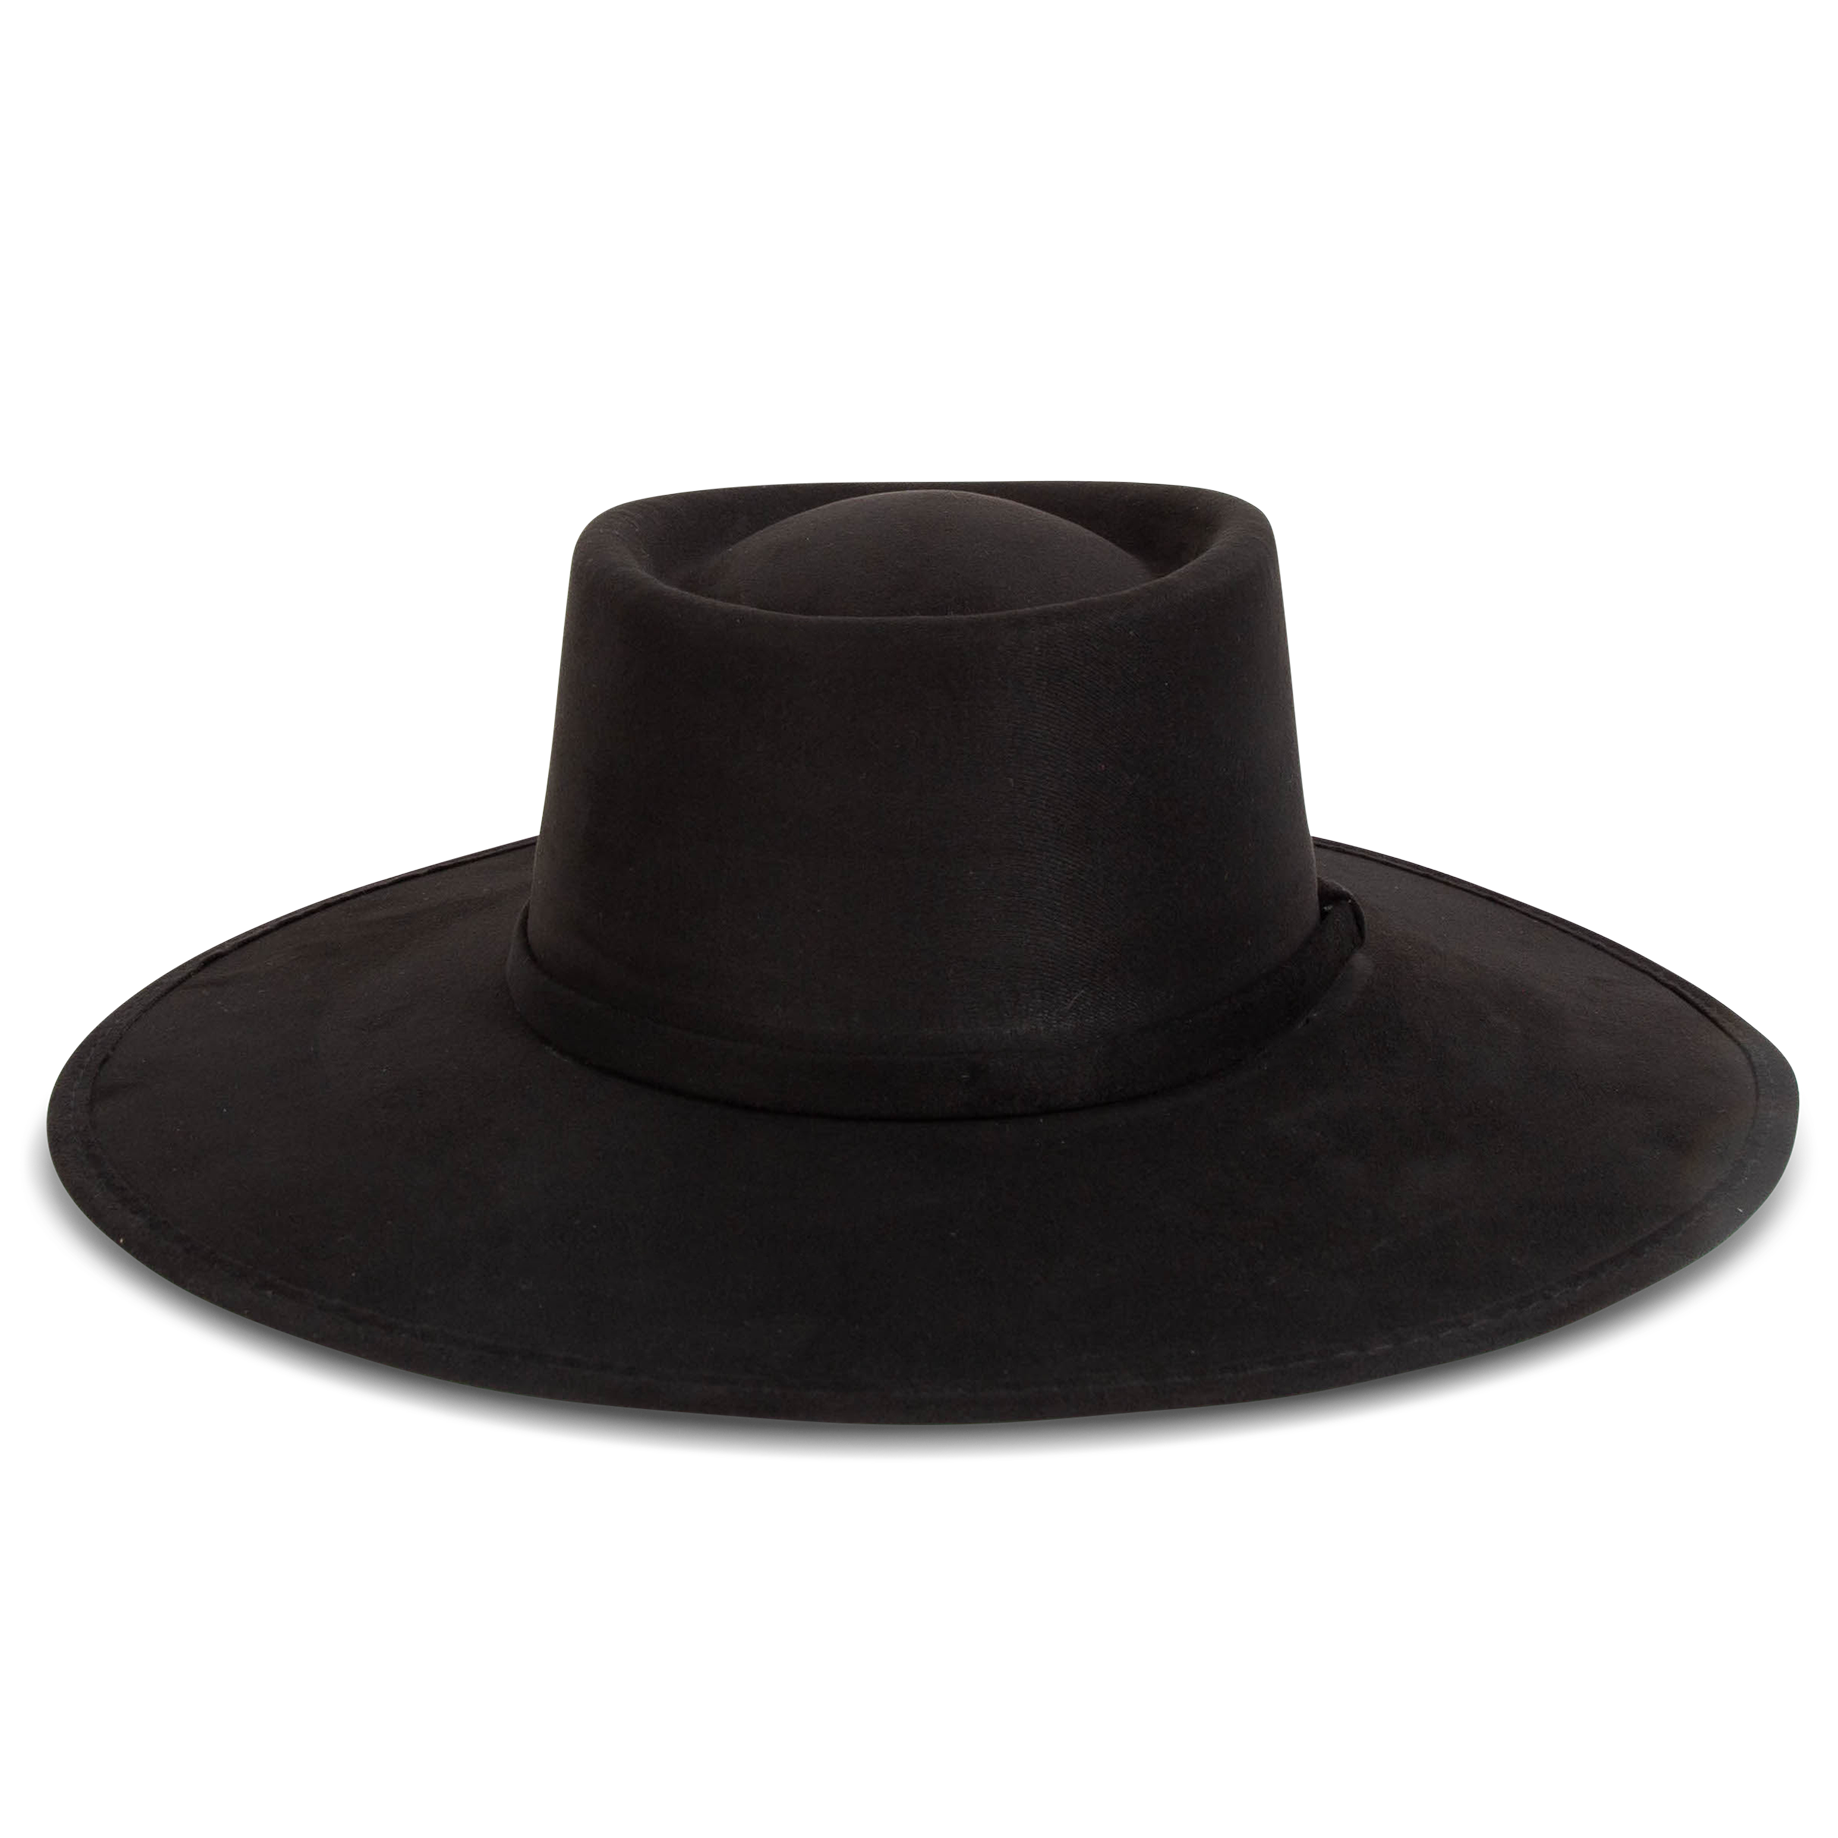 FREEBIRD Georgia black flat wide-brim hat featuring telescope-shaped crown and tonal ribbon band